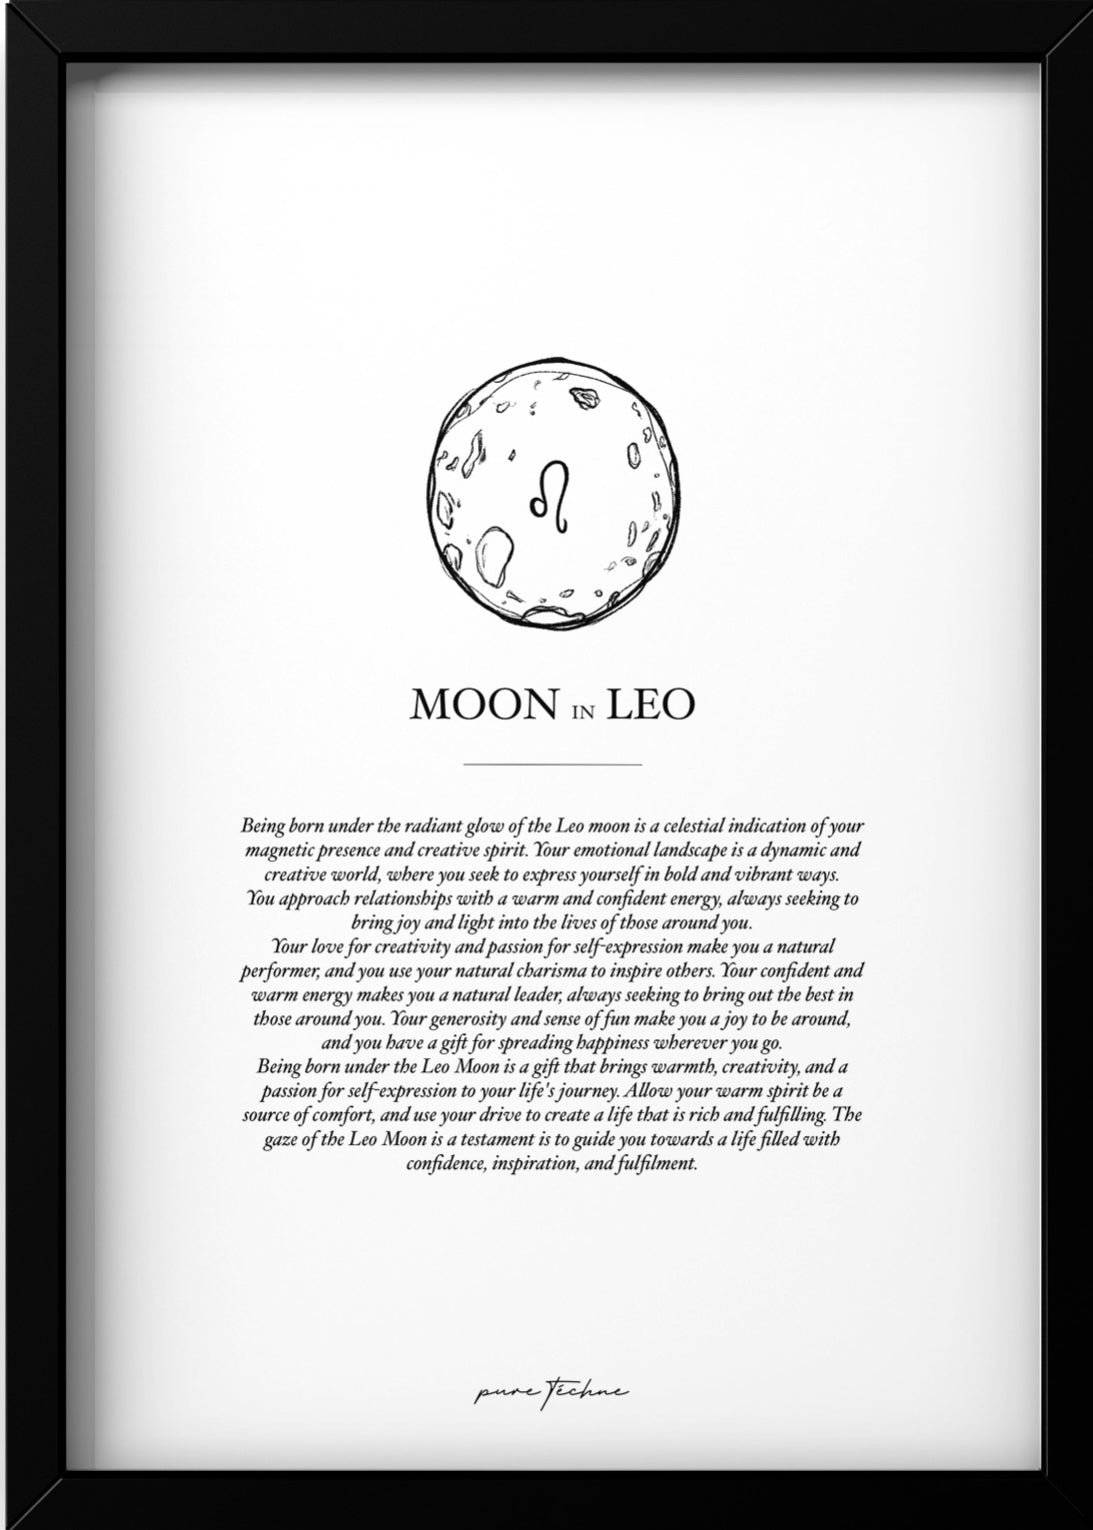 The Leo Moon